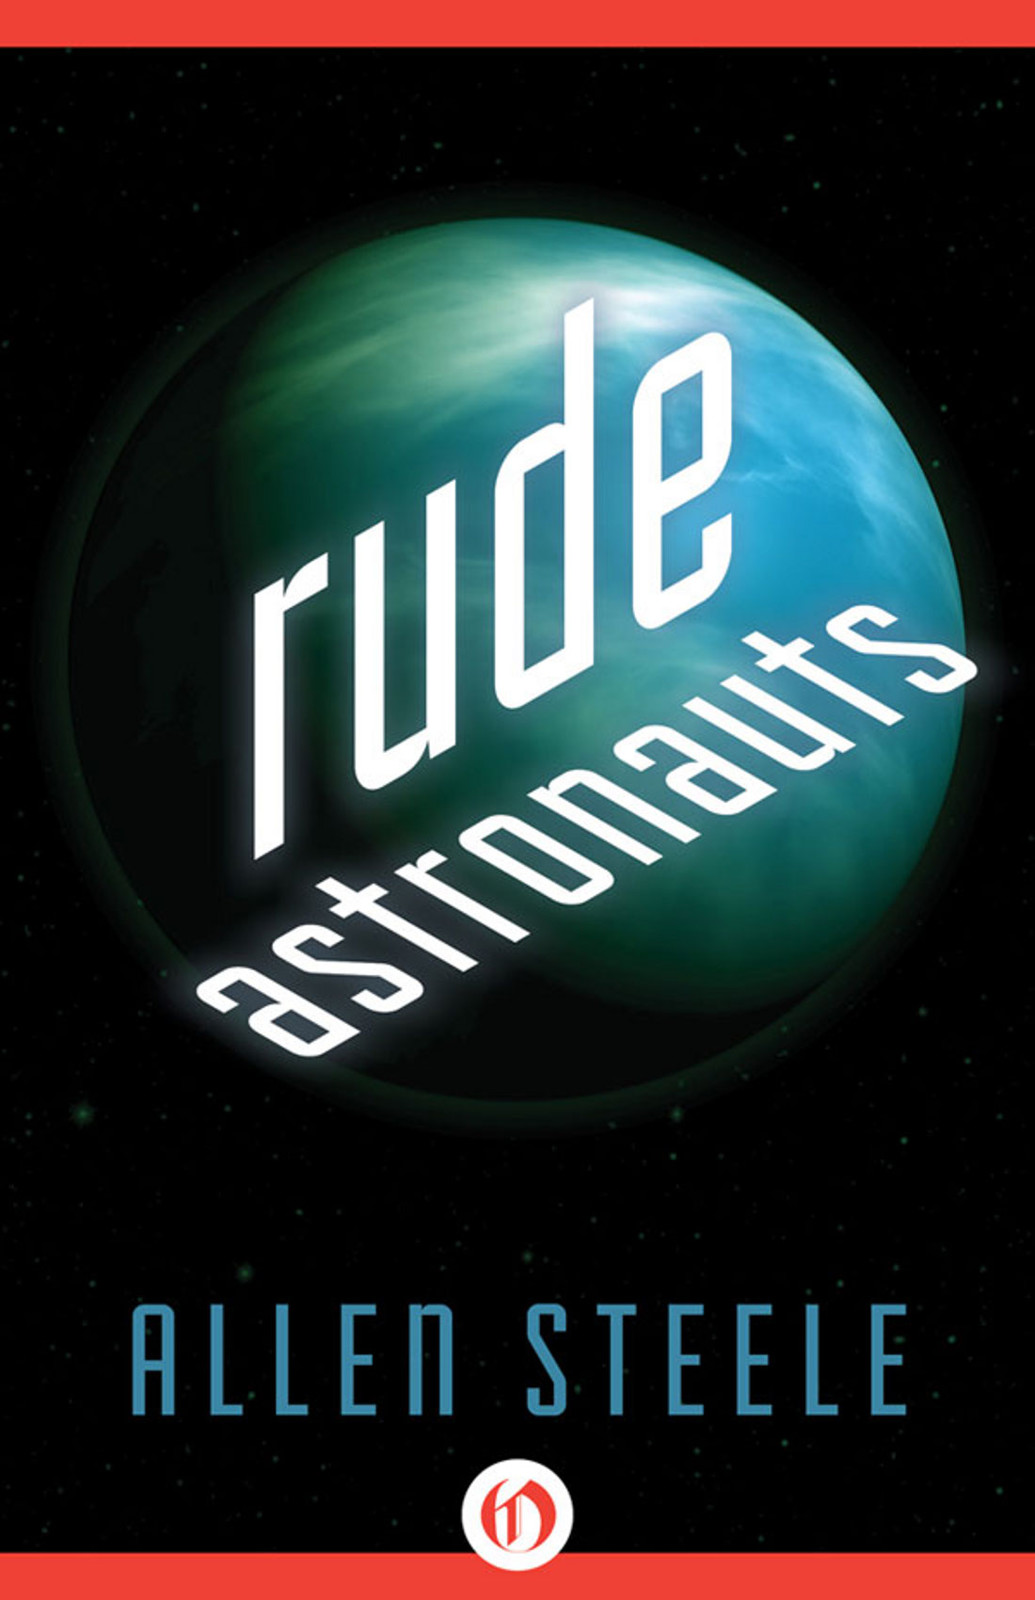 Rude Astronauts by Allen Steele